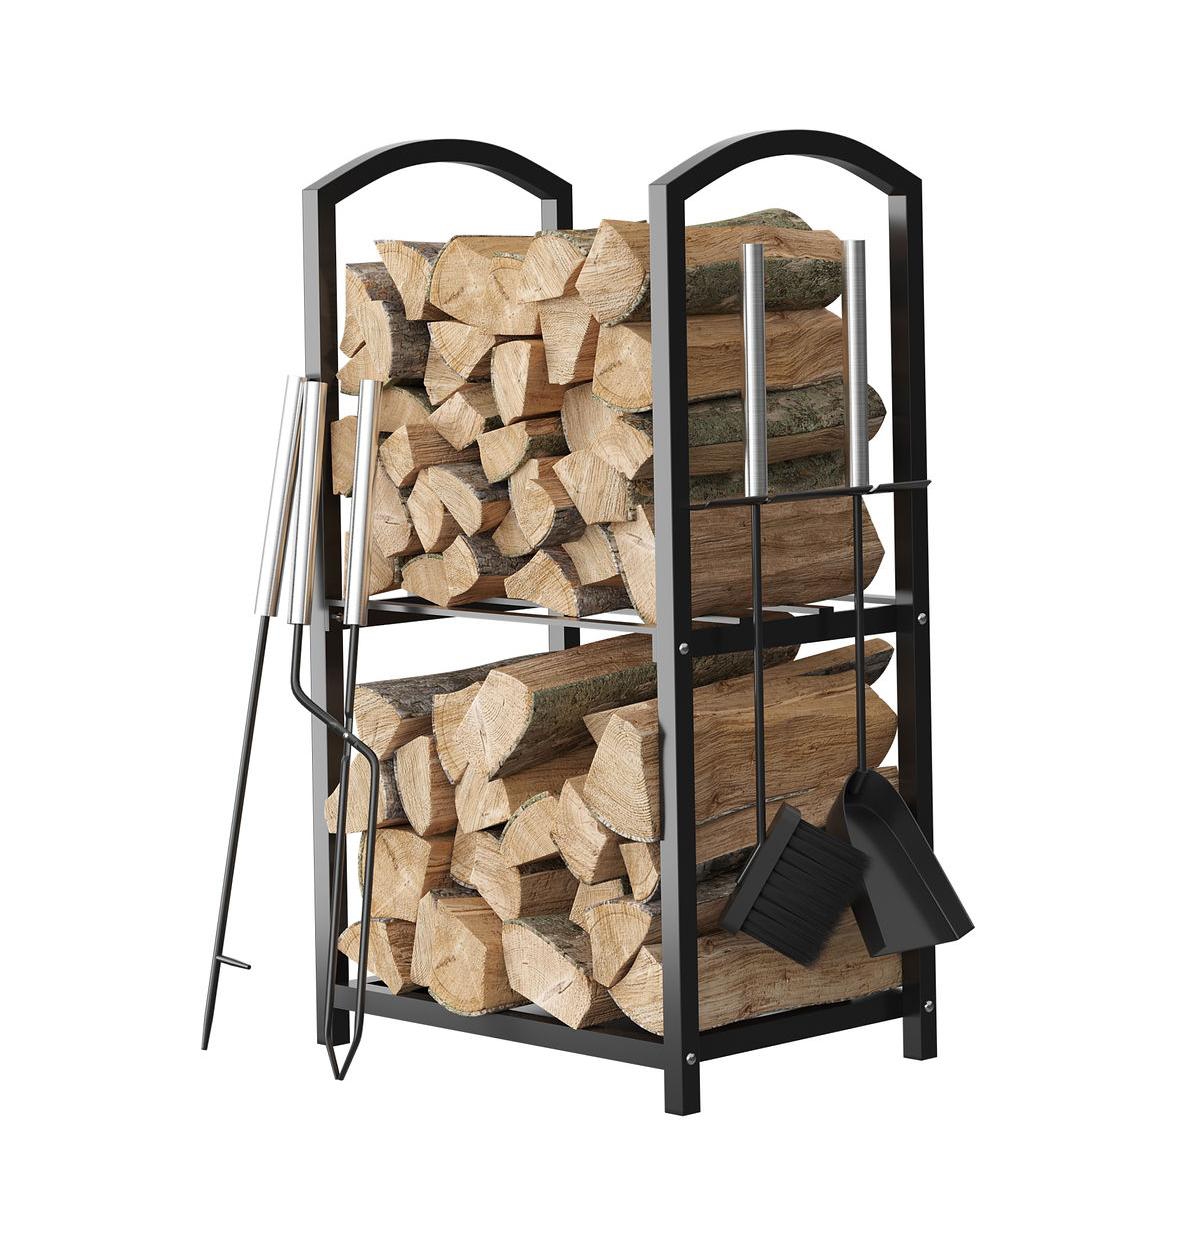 Firewood Rack Outdoor Indoor - 2-Tier Firewood Holder with Fireplace Tools Set, Brush, Shovel, Poker, Tongs - Waterproof Steel Pipe Log Holder, Black